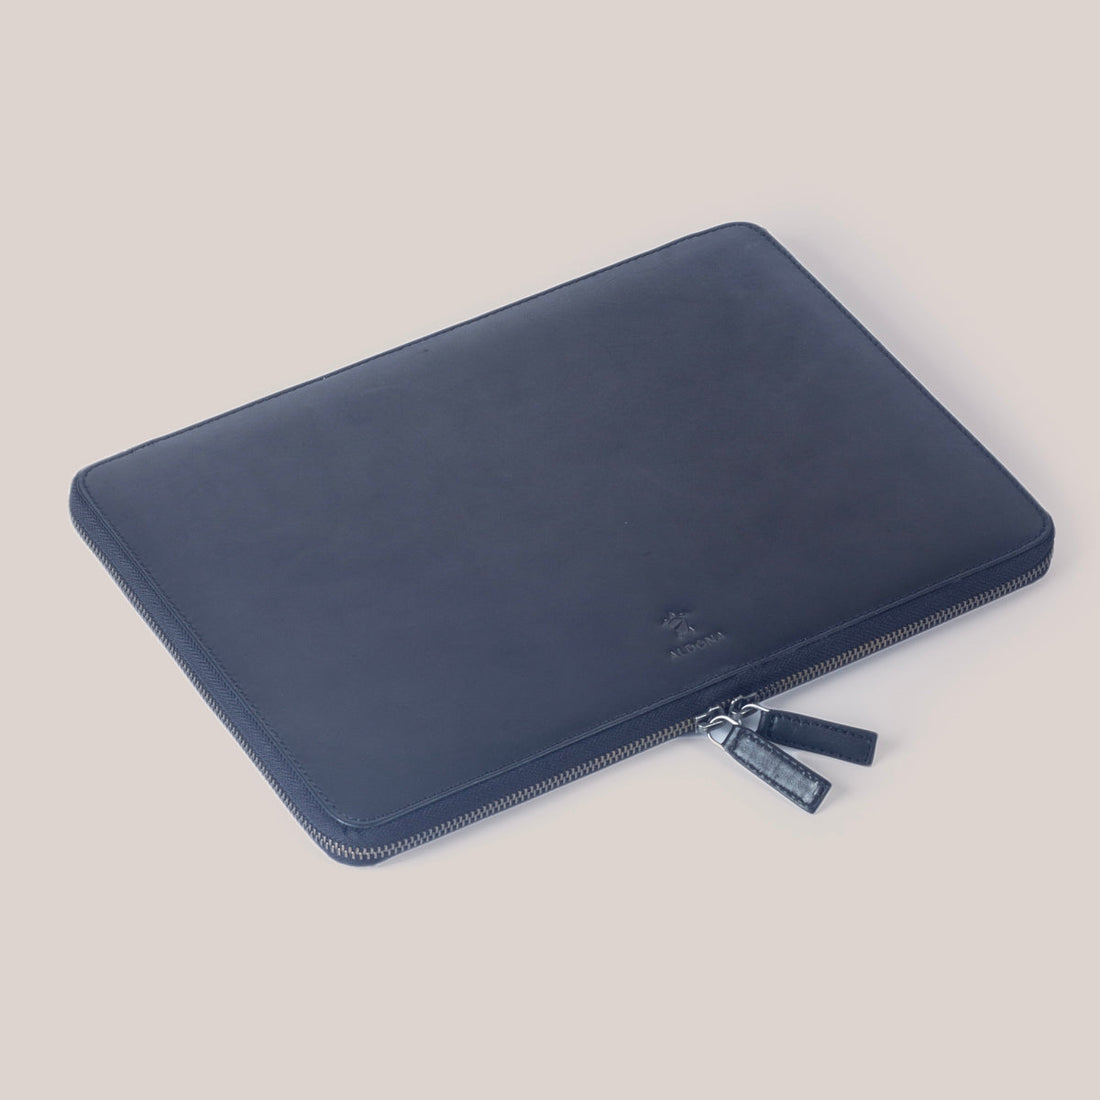 MacBook Pro 13 Zippered Laptop Case - Cognac